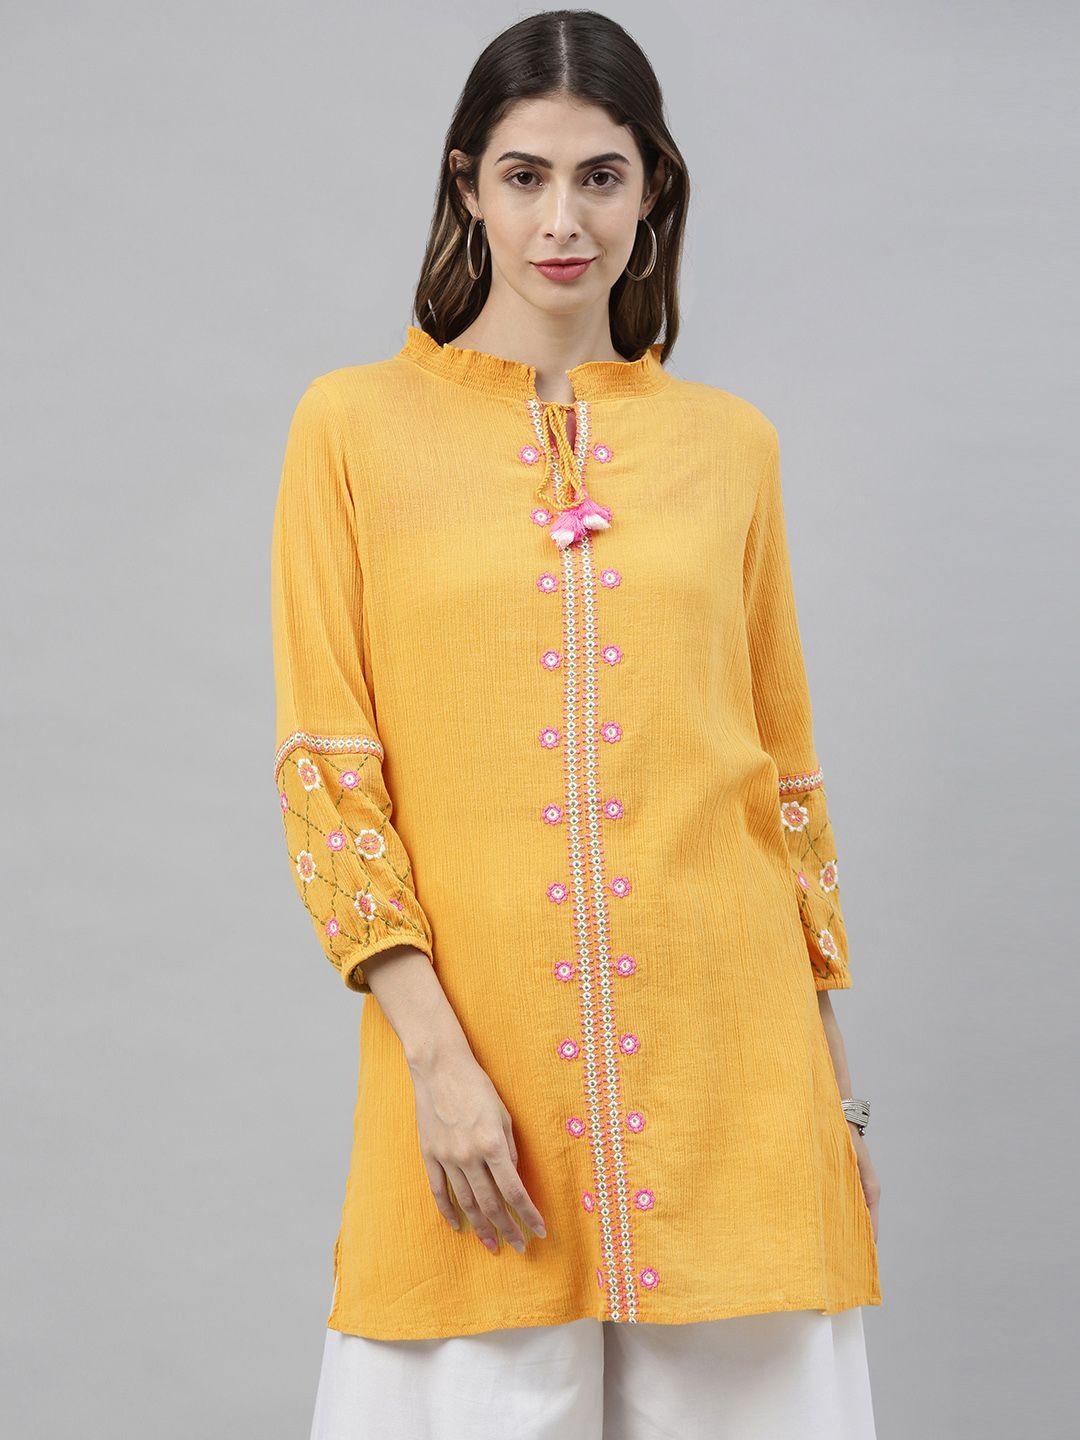 Global Desi Women's Mustard & White Solid Tunic